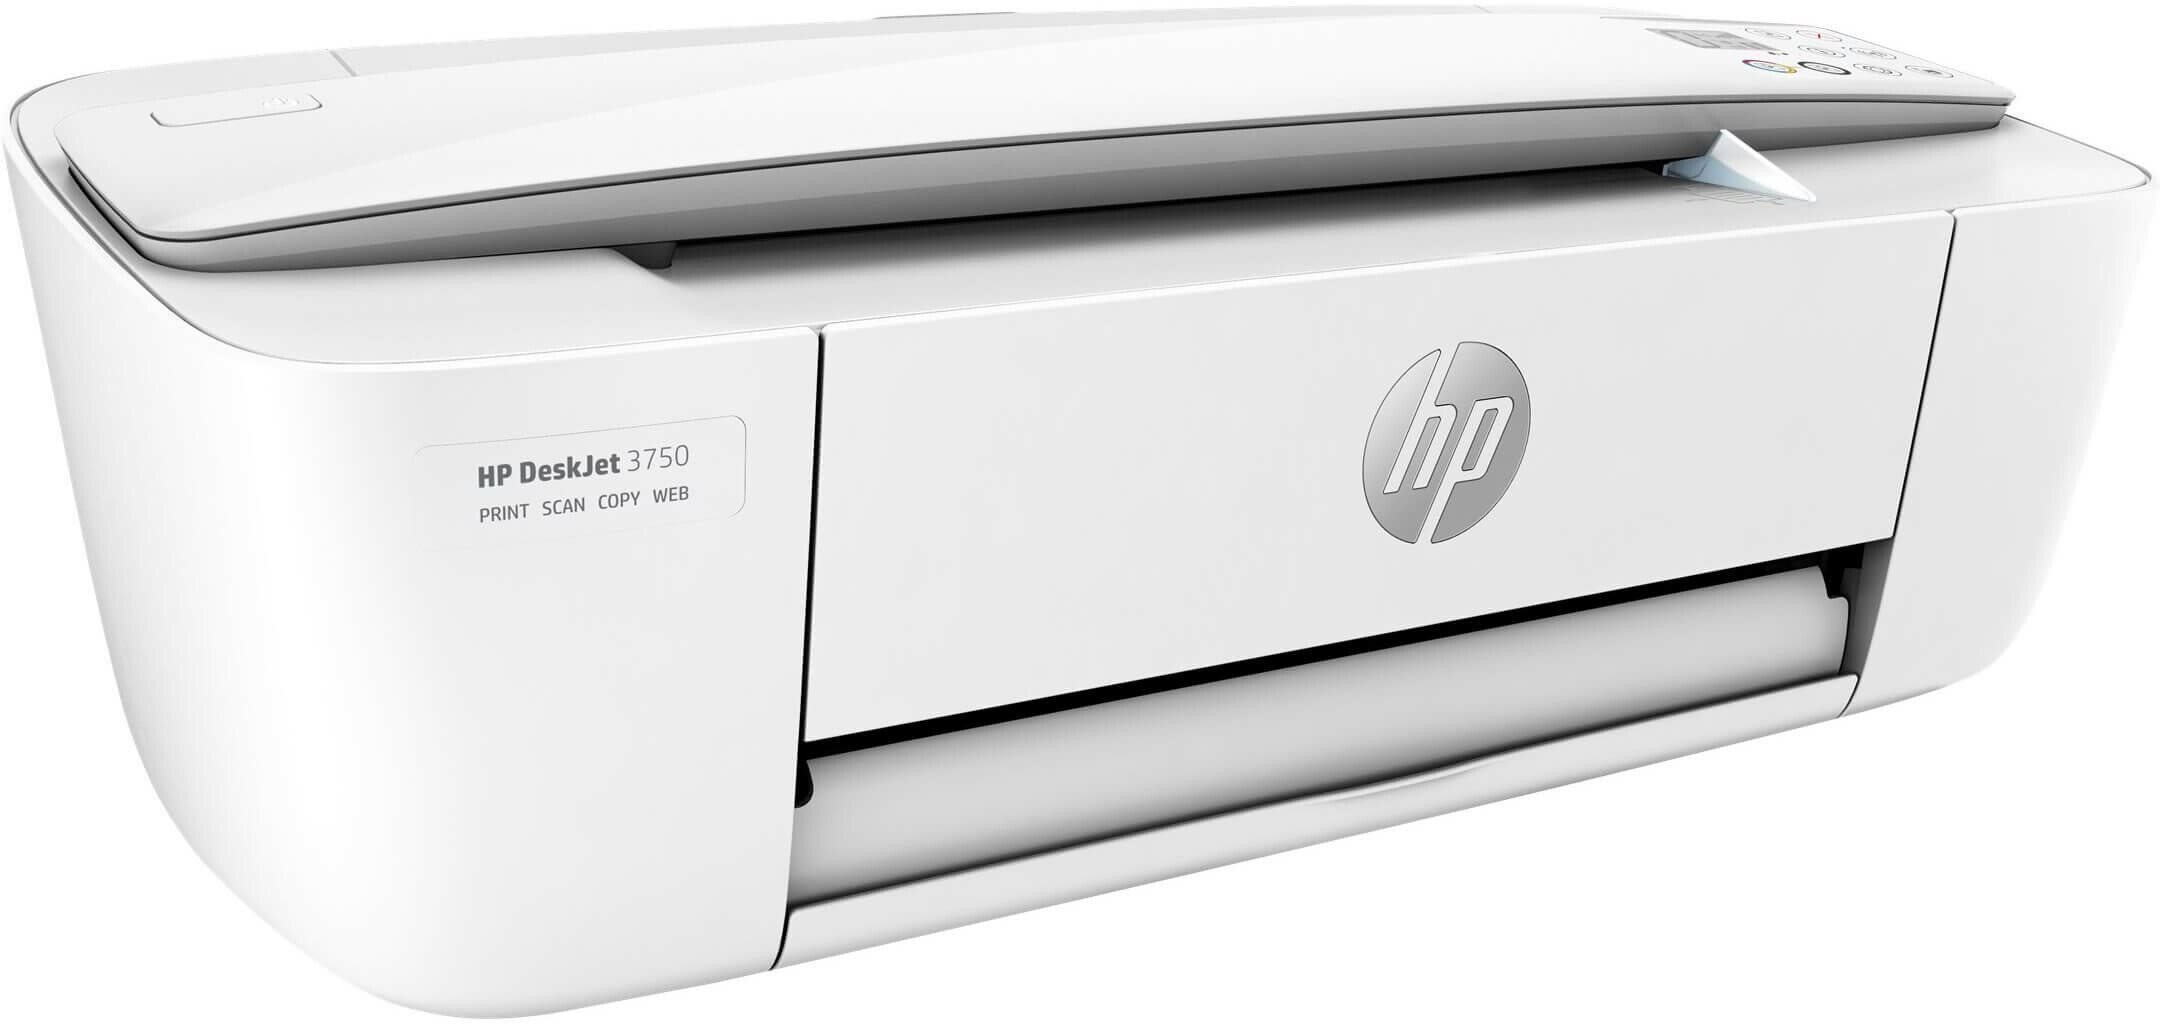 Inkjet Printer HP DeskJet 3750 All-in-One, Grey Lateral view